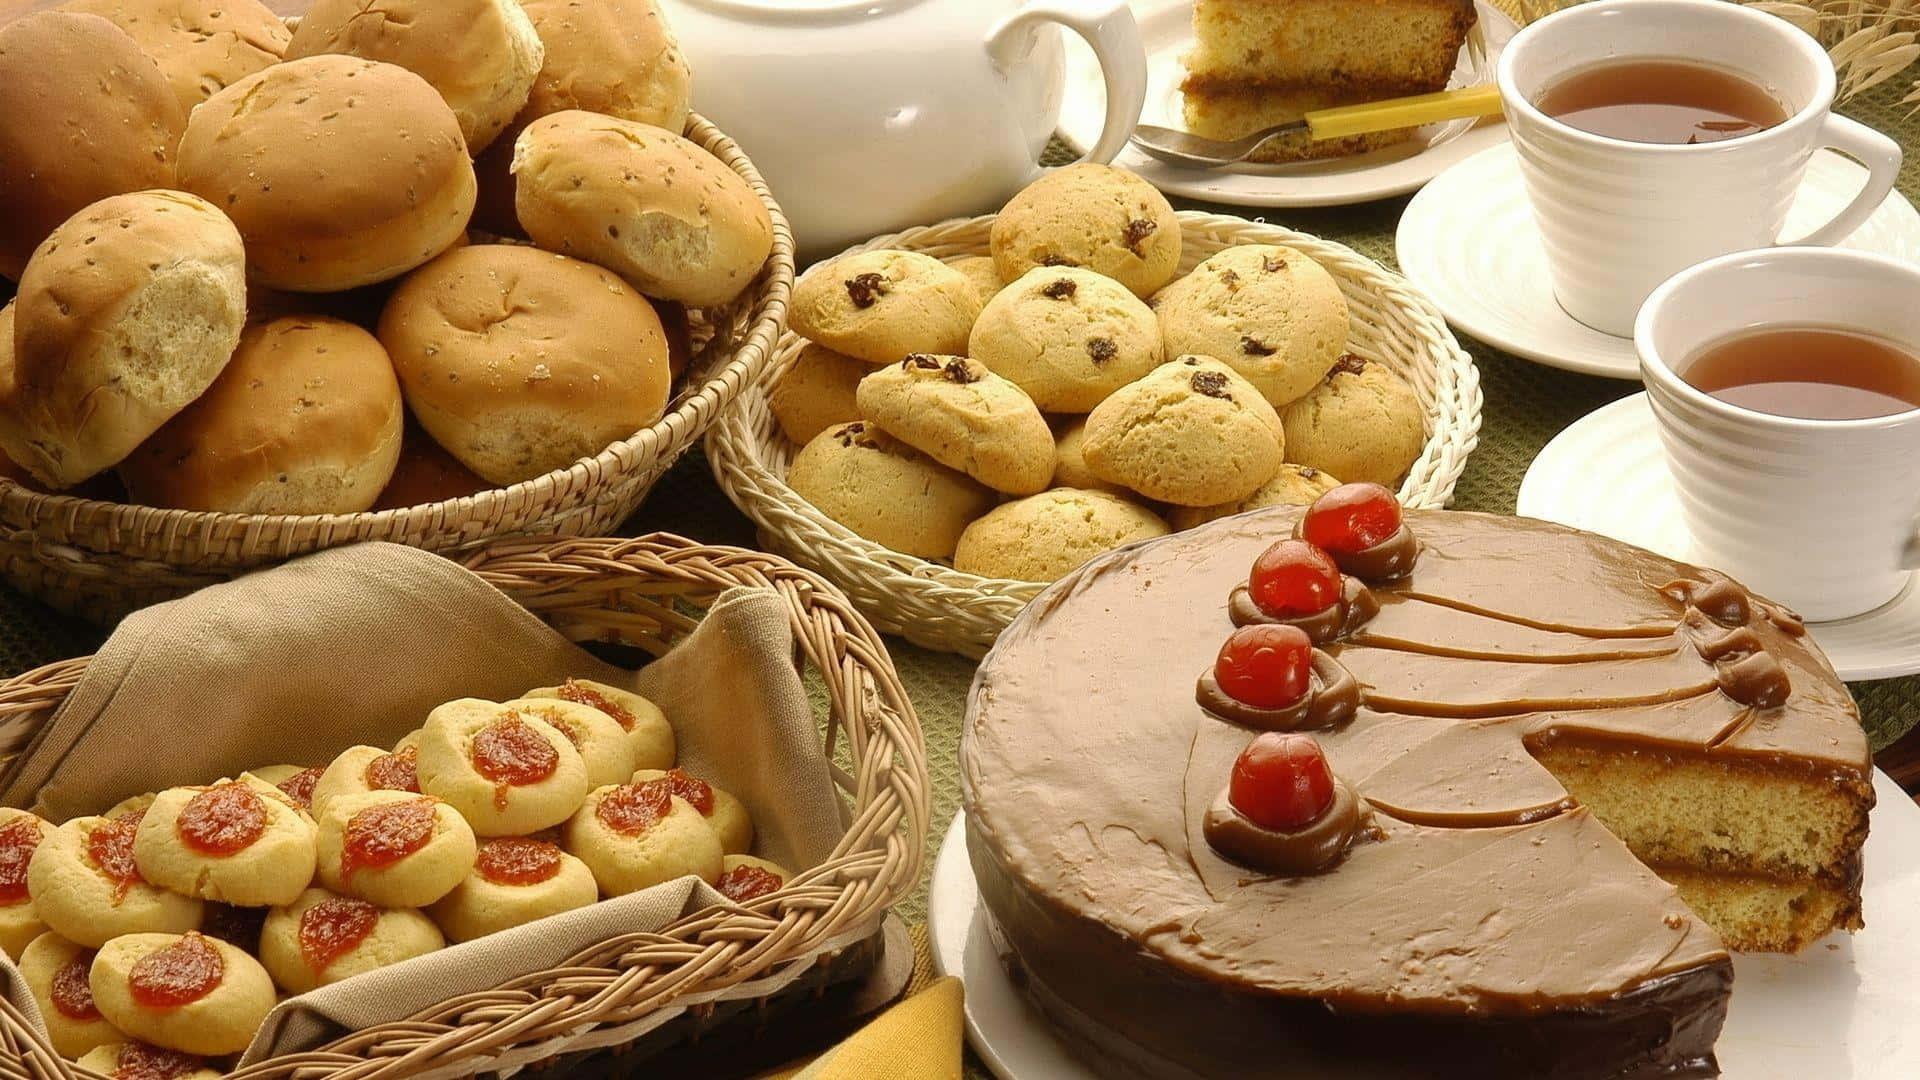 Freshly-baked treats from a local bakery